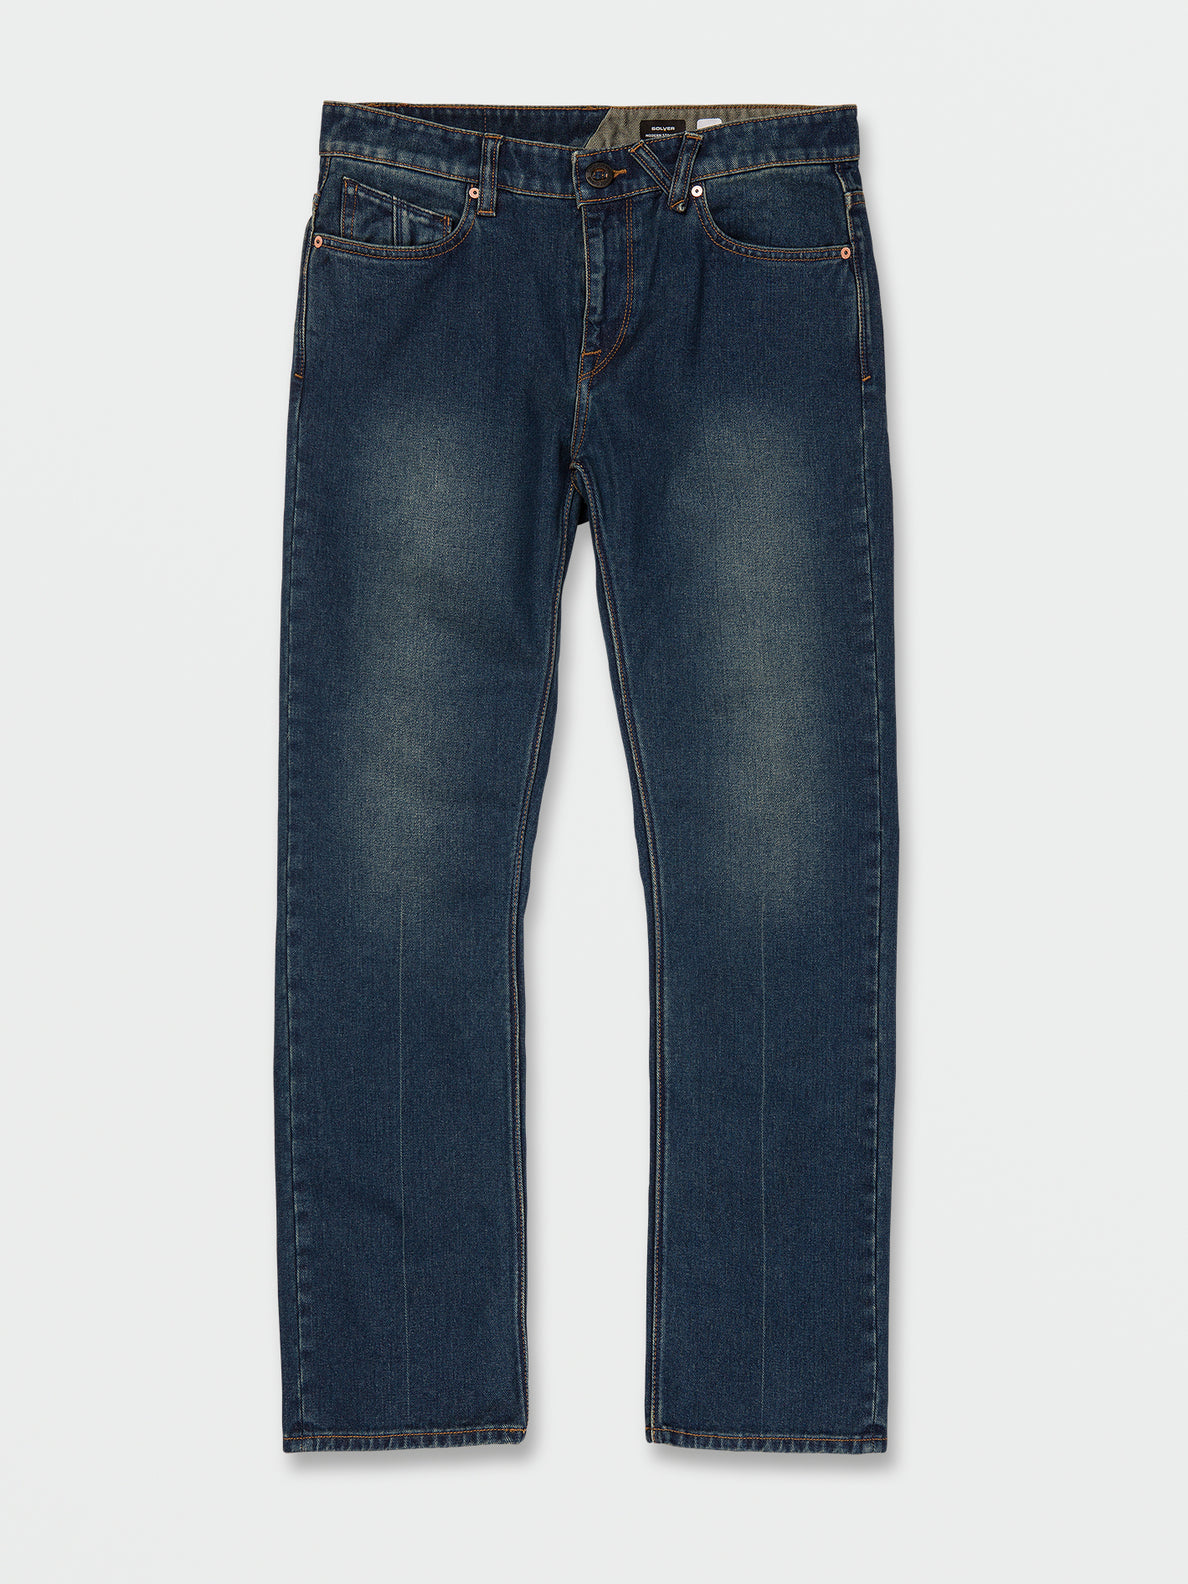 Solver Modern Fit Jeans - Matured Blue